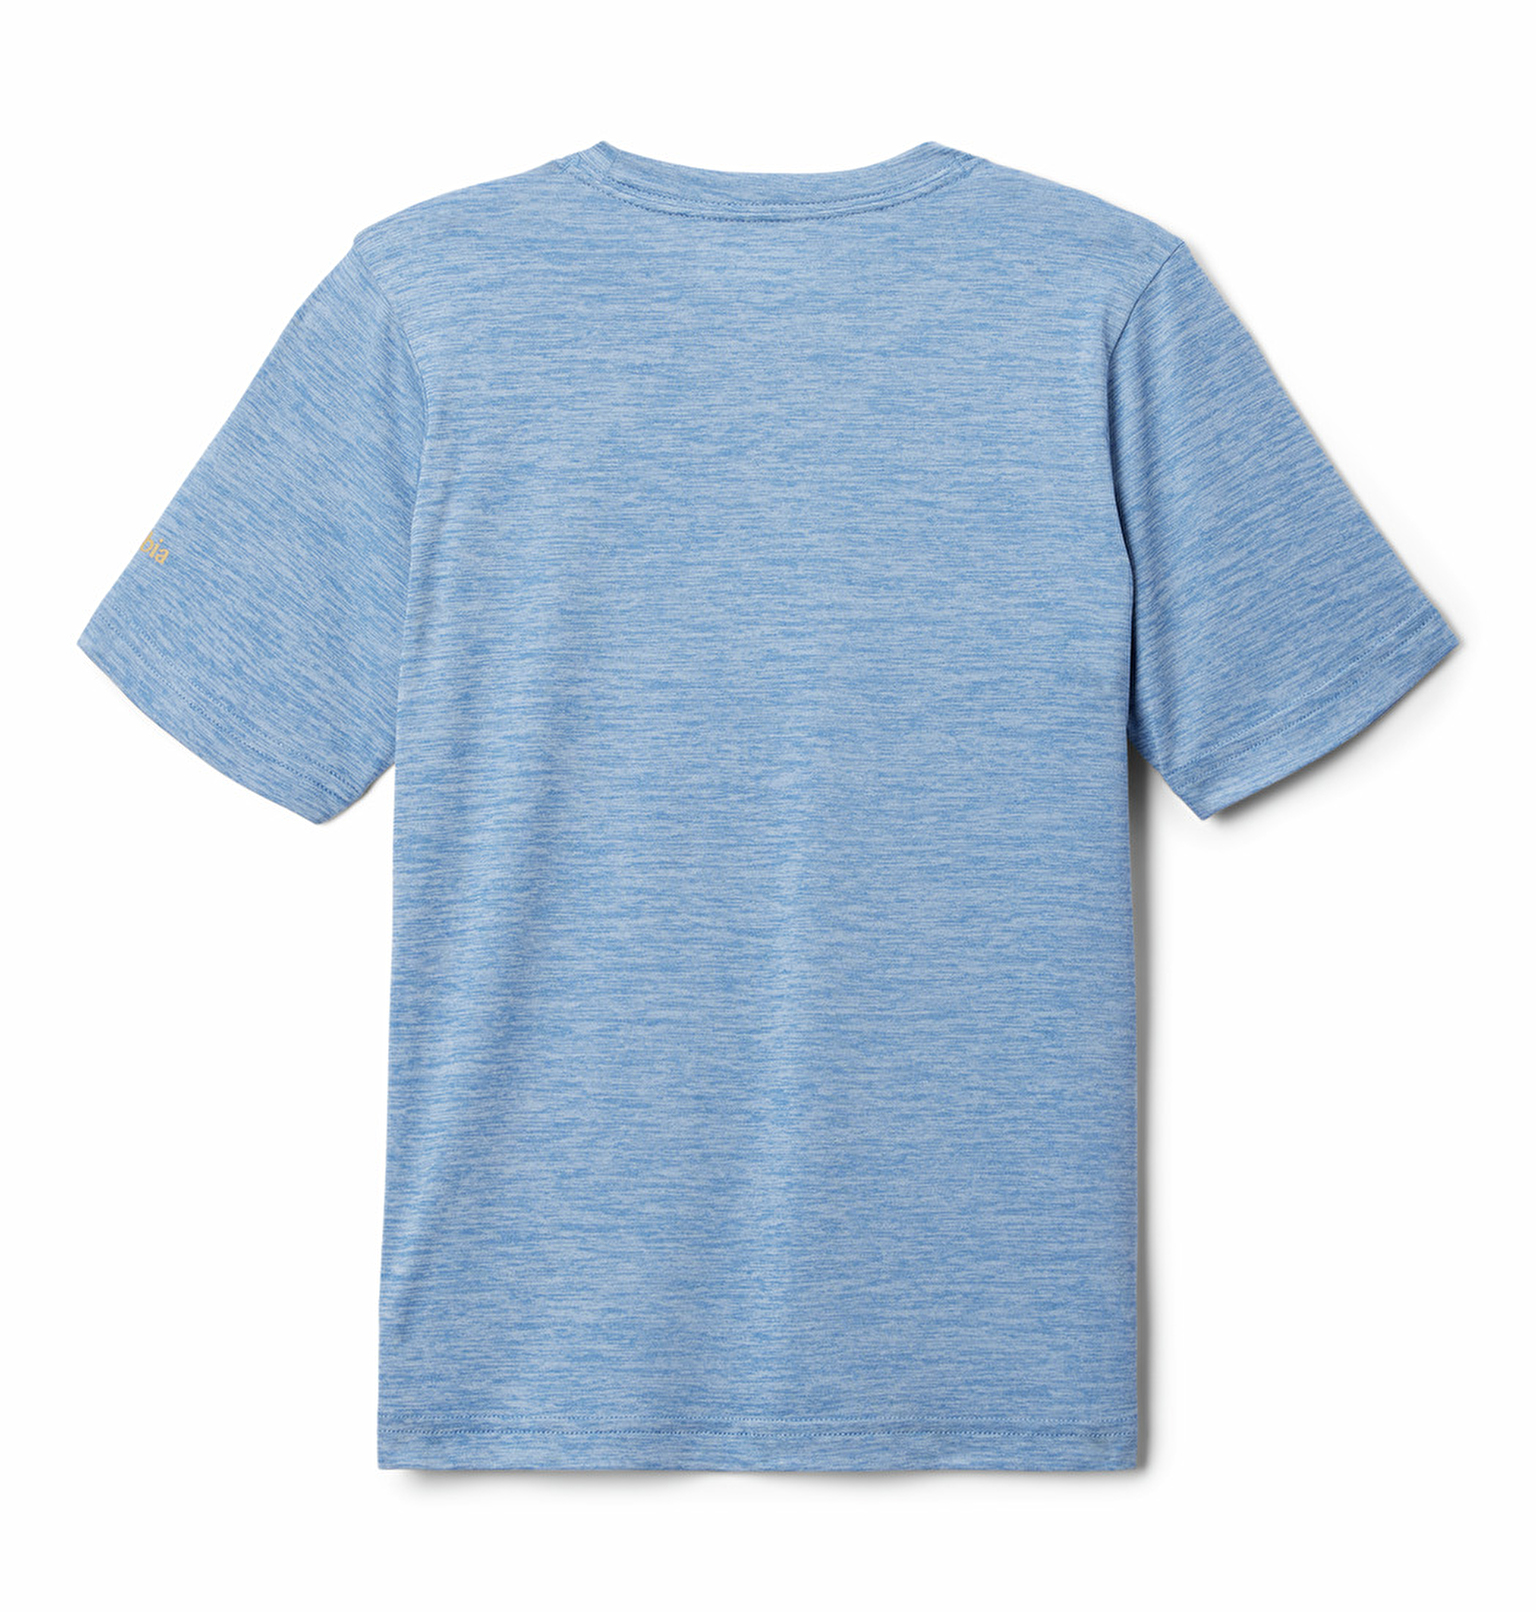 Mount Echo Graphic Çocuk Kısa Kollu T-Shirt